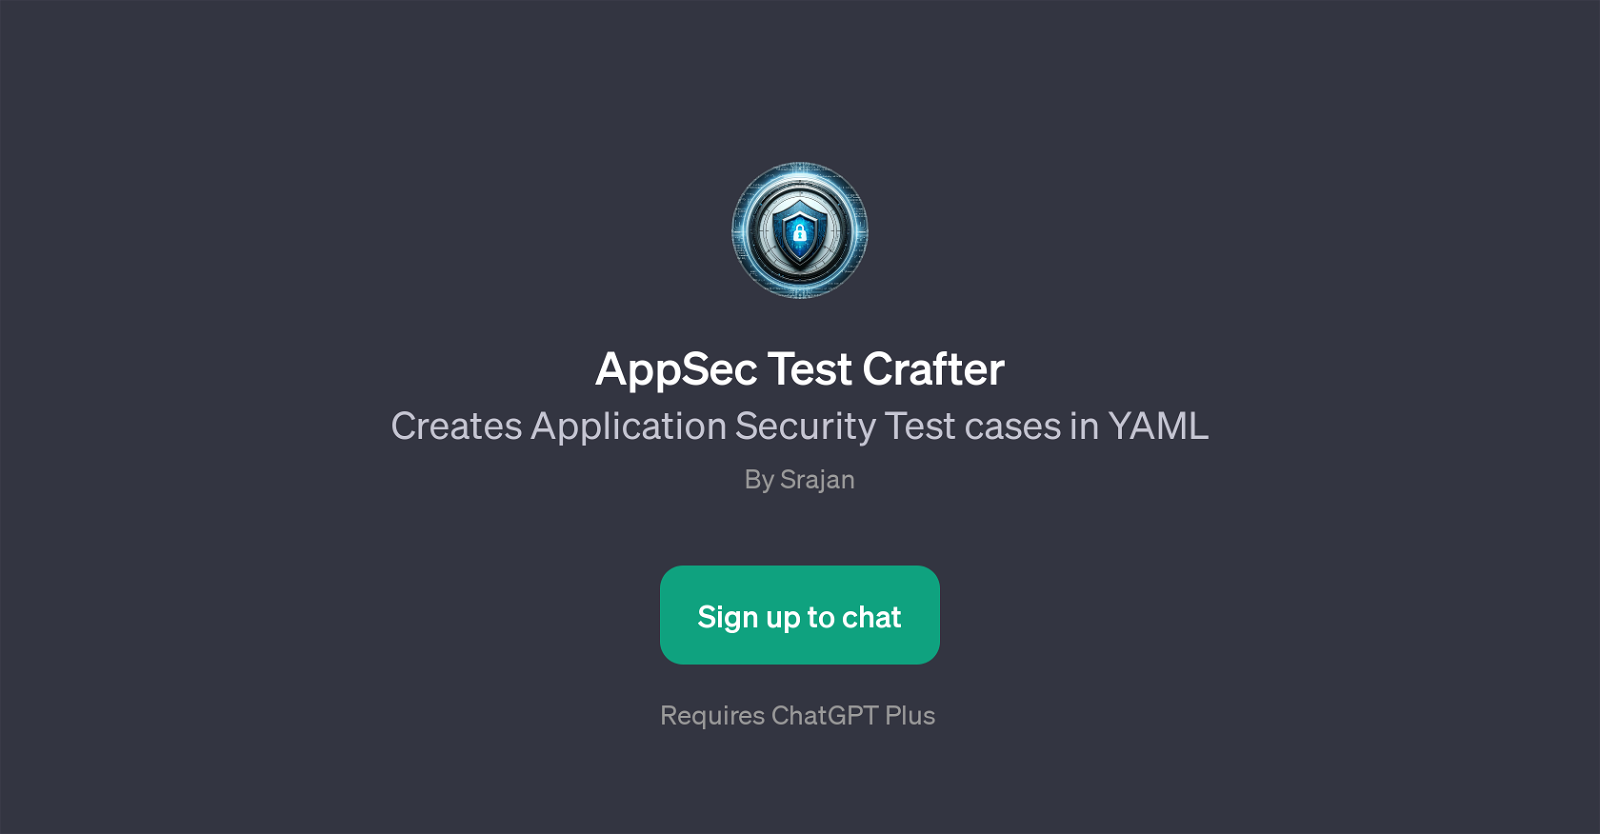 AppSec Test Crafter website